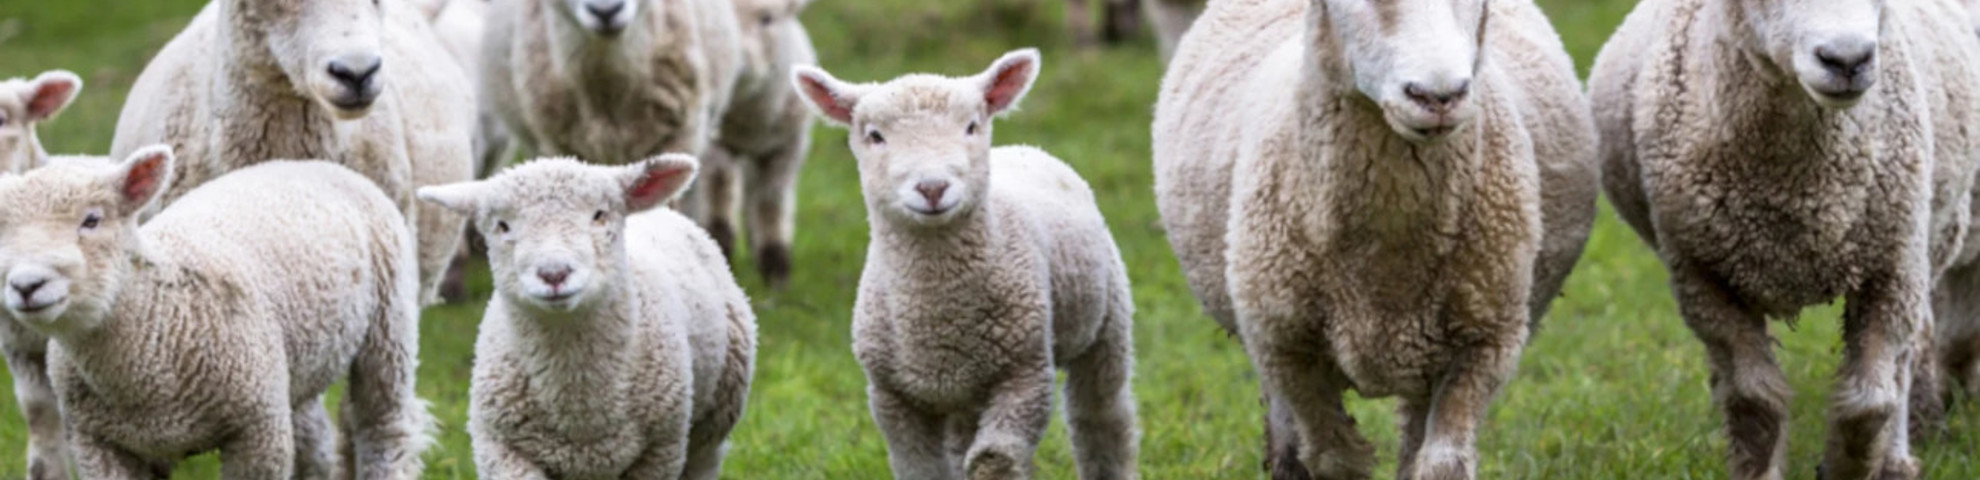 A group of sheep on a farm.